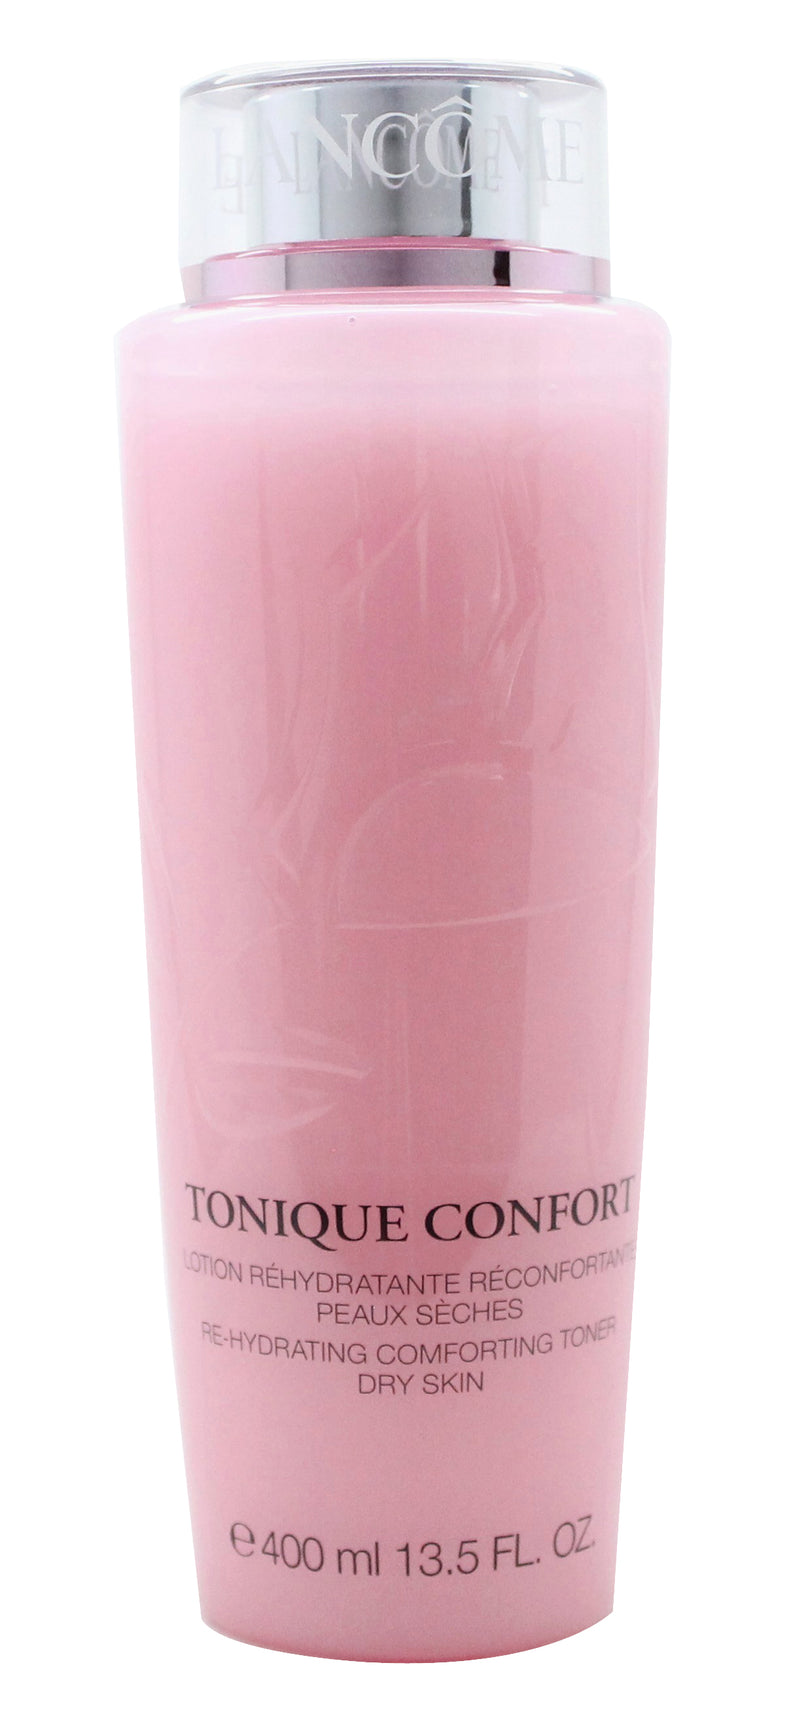 Lancôme Tonique Confort Hydrating Toner 400ml